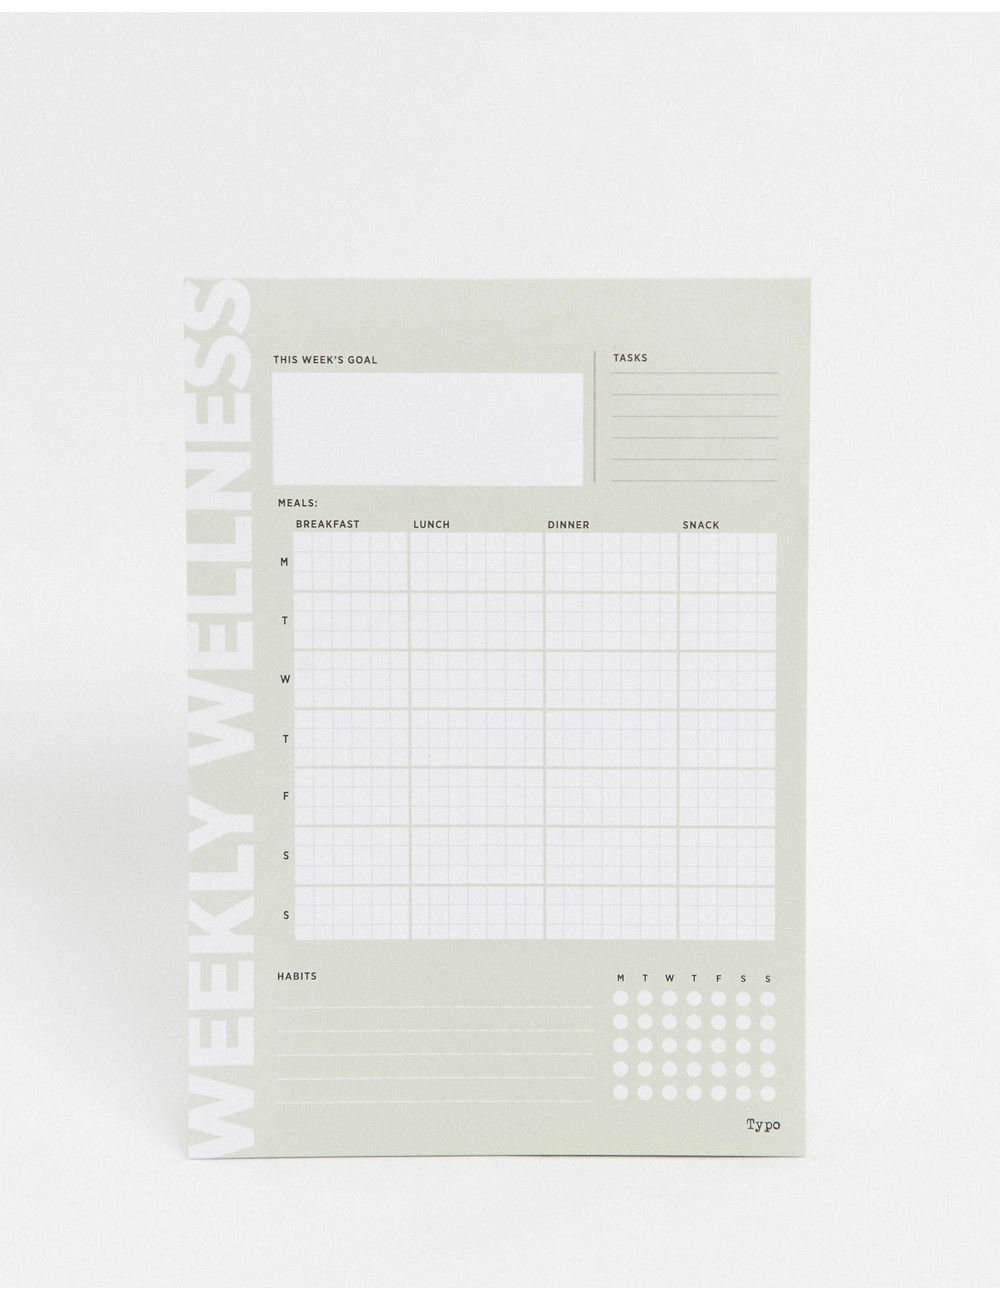 Typo weekly wellness planner